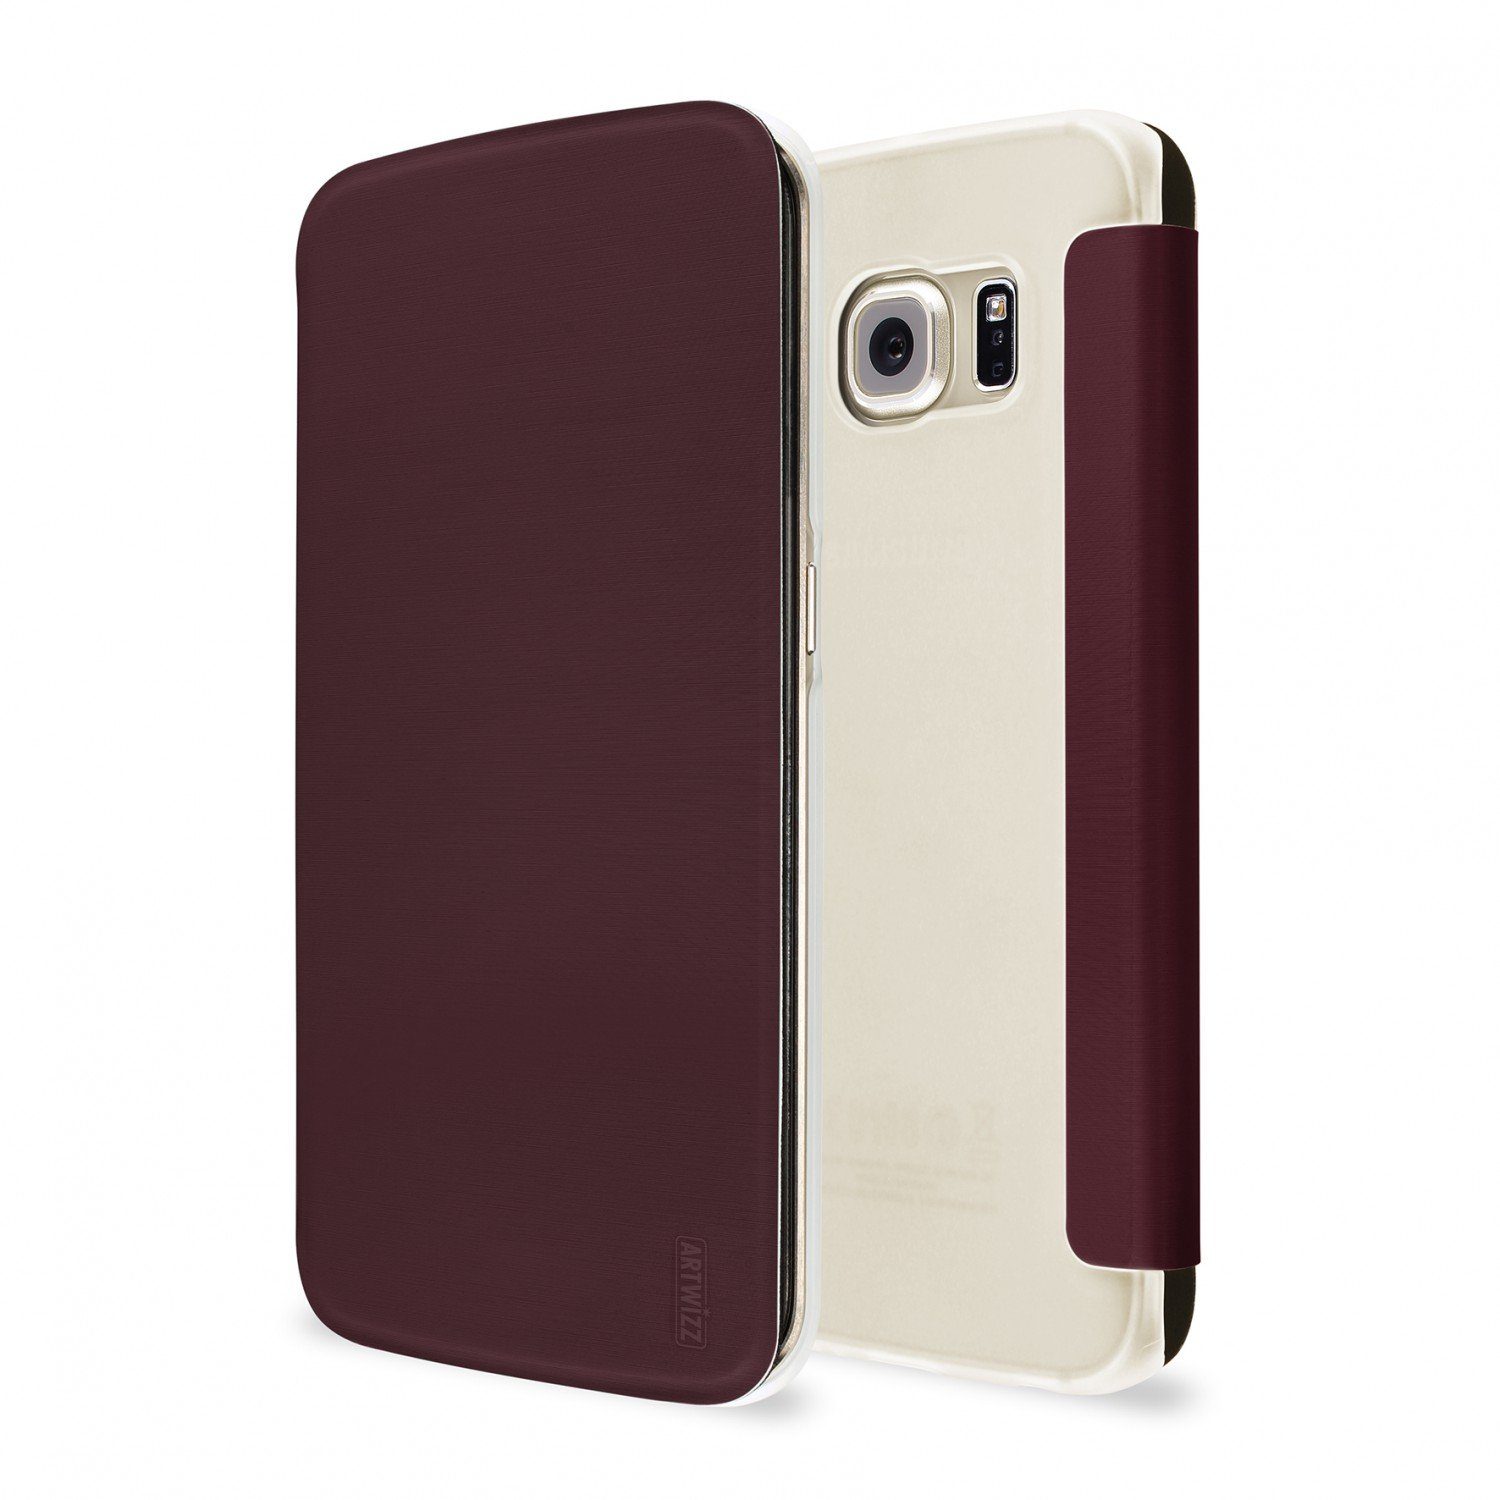 Artwizz Flip Case SmartJacket® for Samsung Galaxy S6 edge, marsala